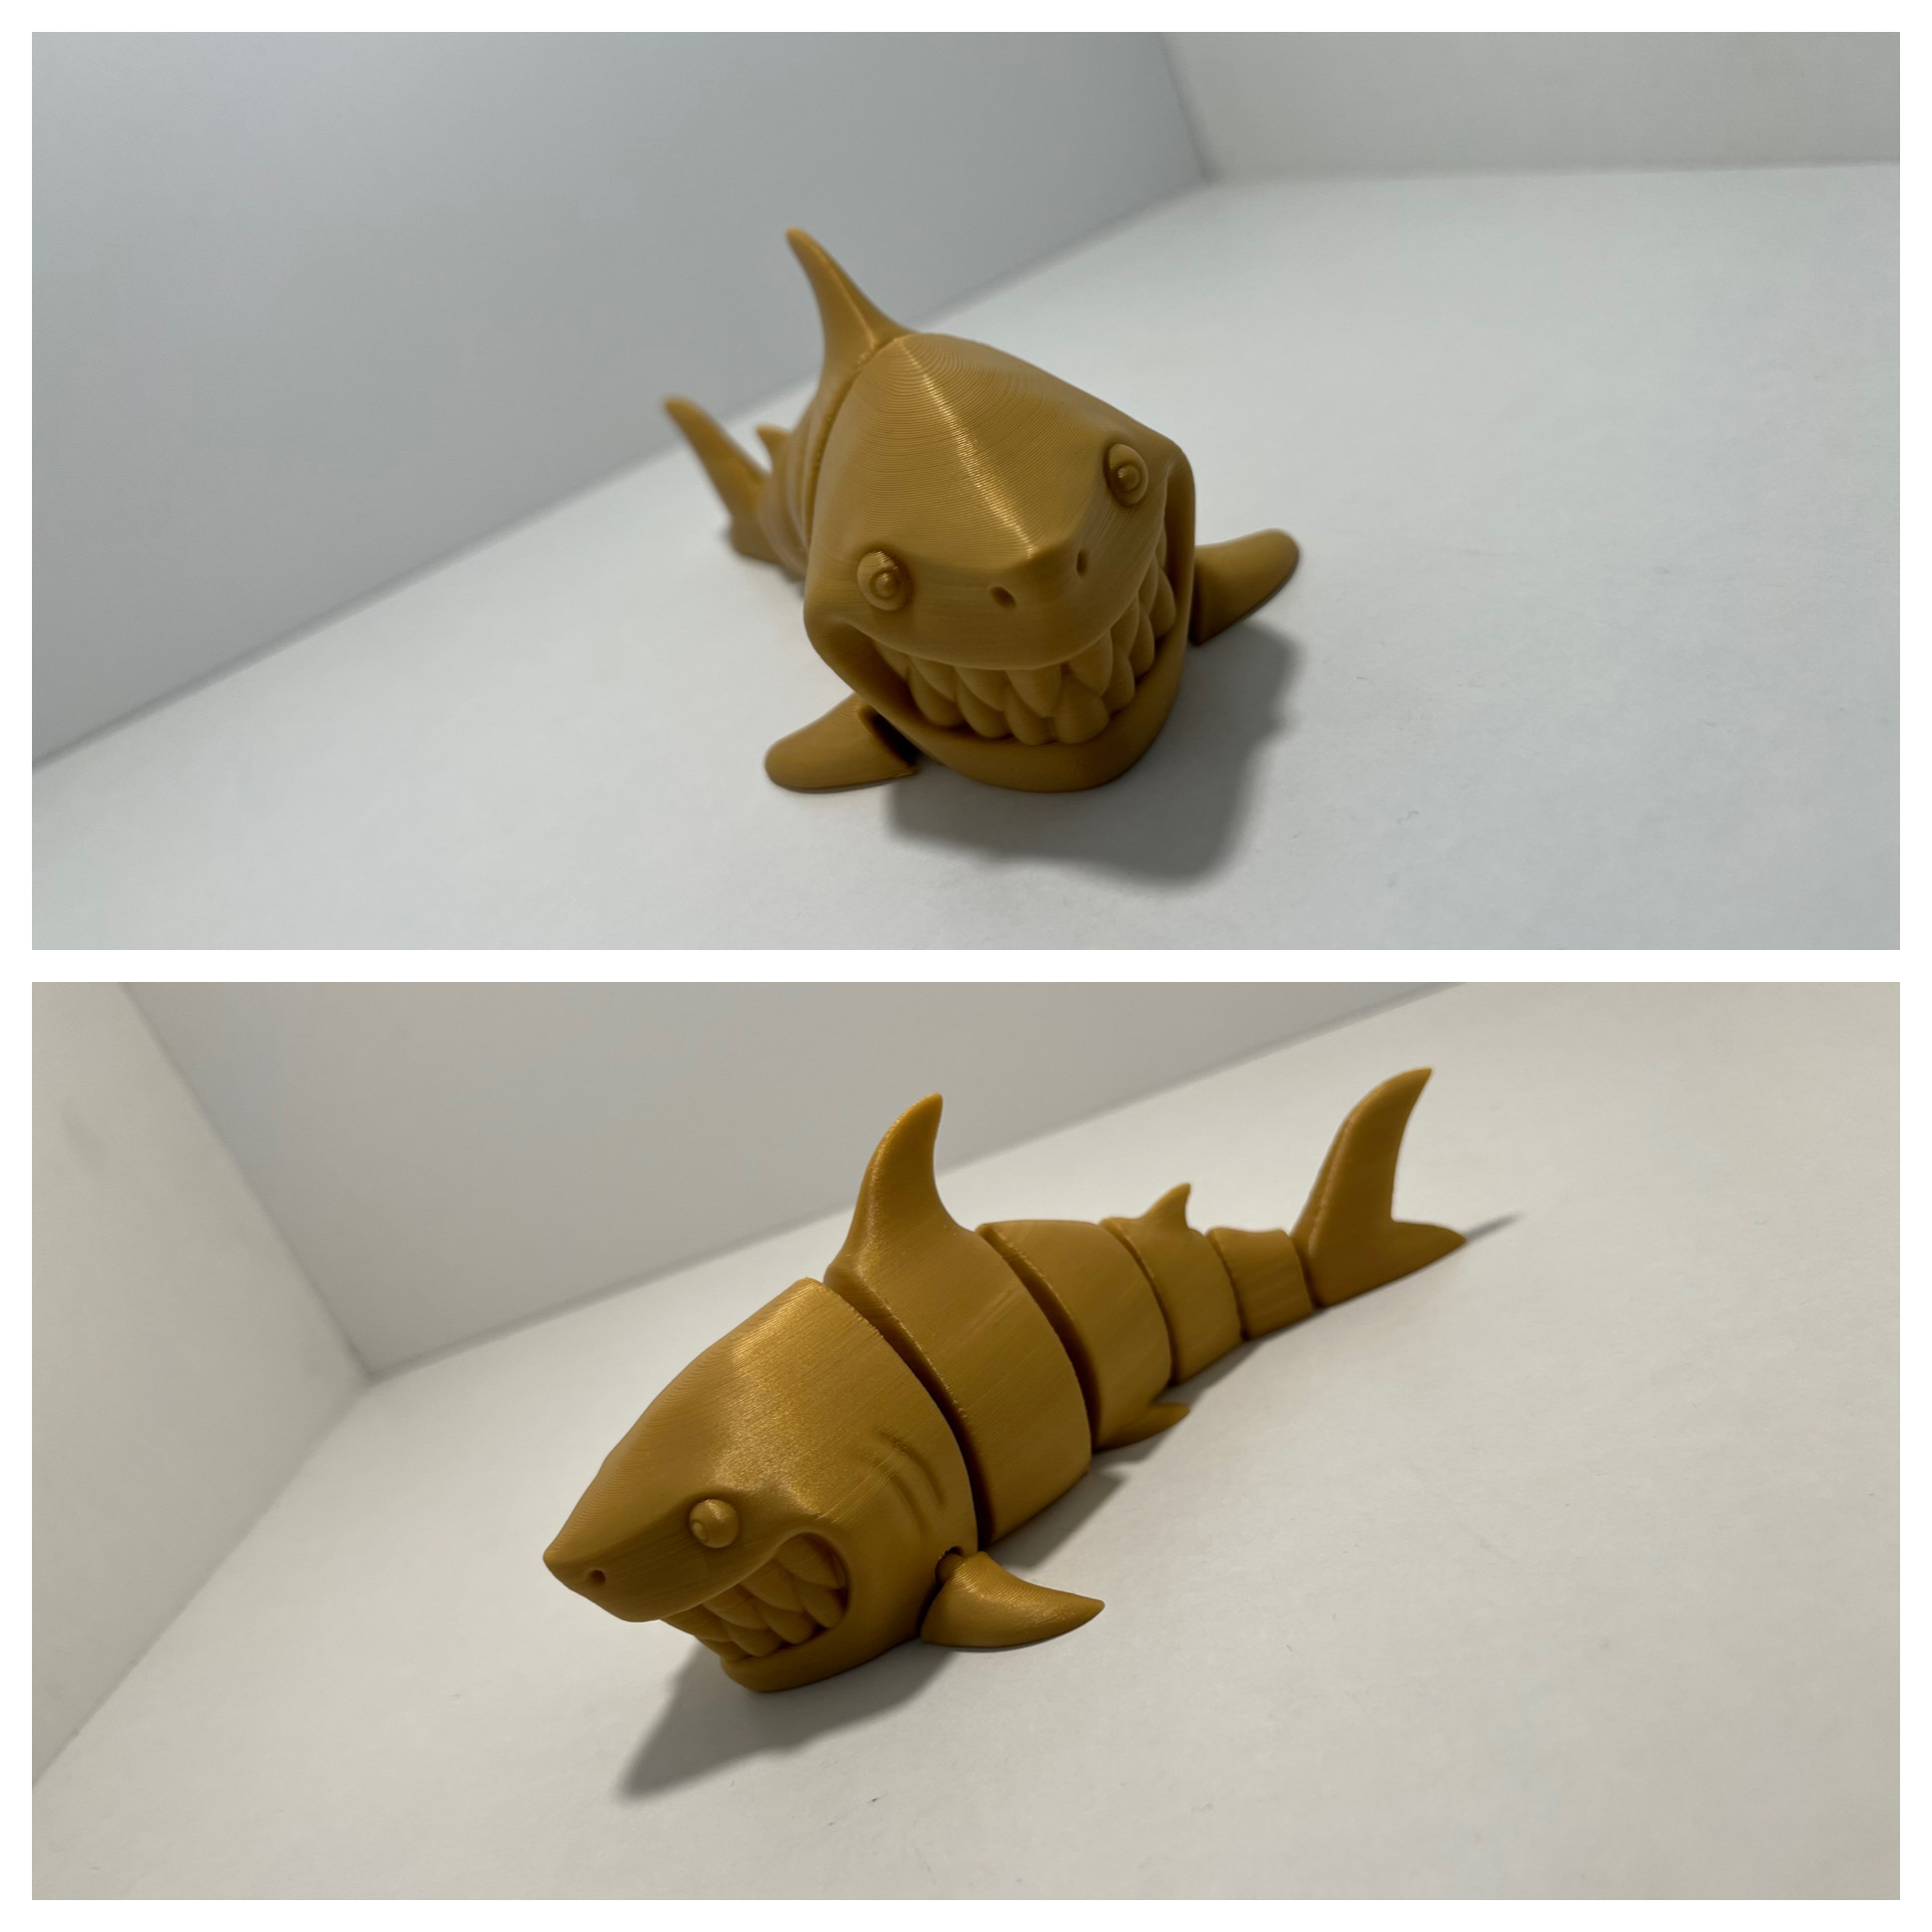 3D Printable SMILING SHARK by Rogi Studios